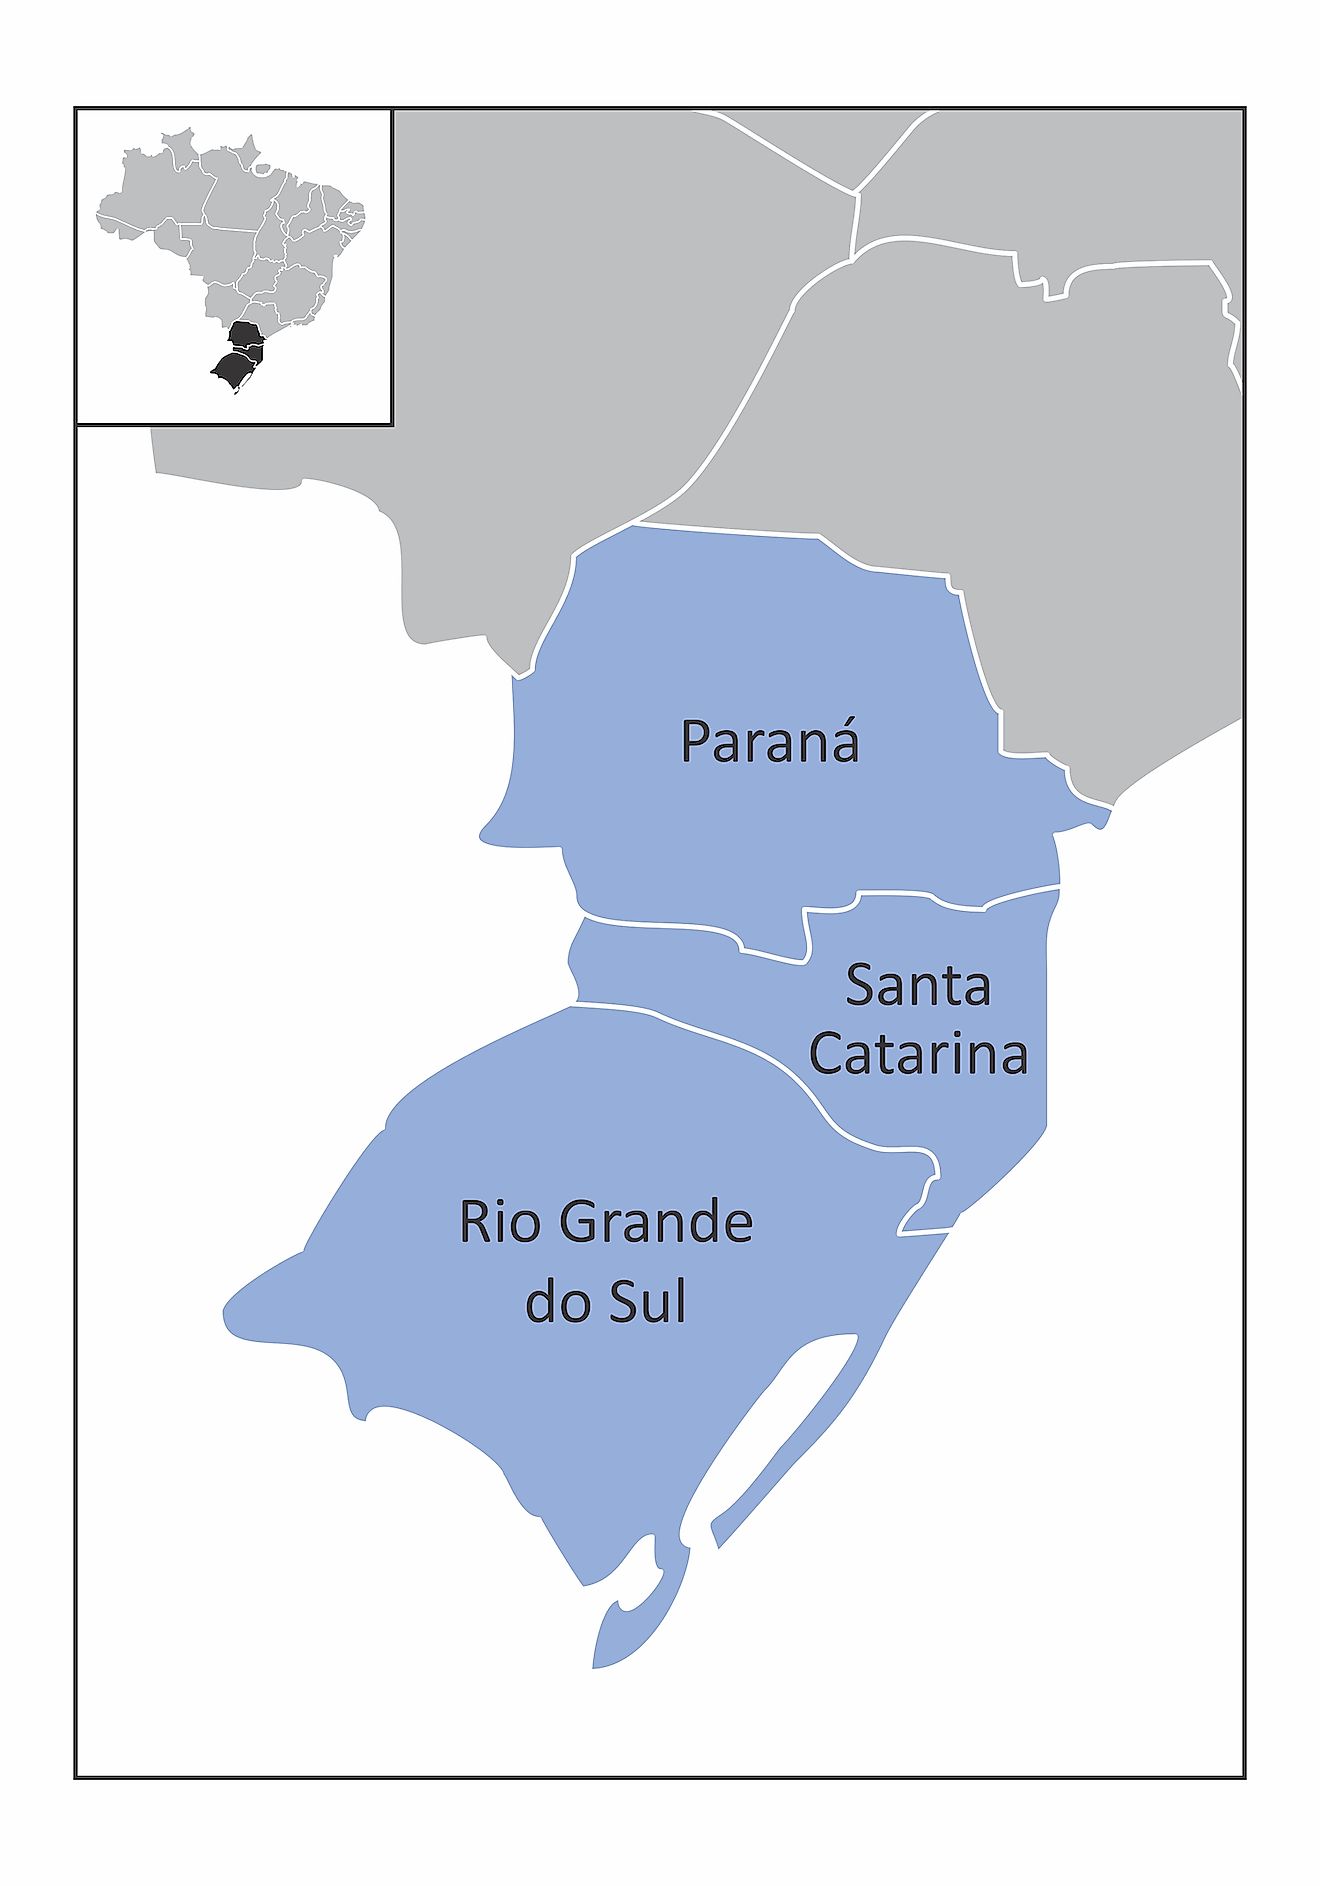 States of South Region of Brazil. Image credit: Luisrftc/Shutterstock.com